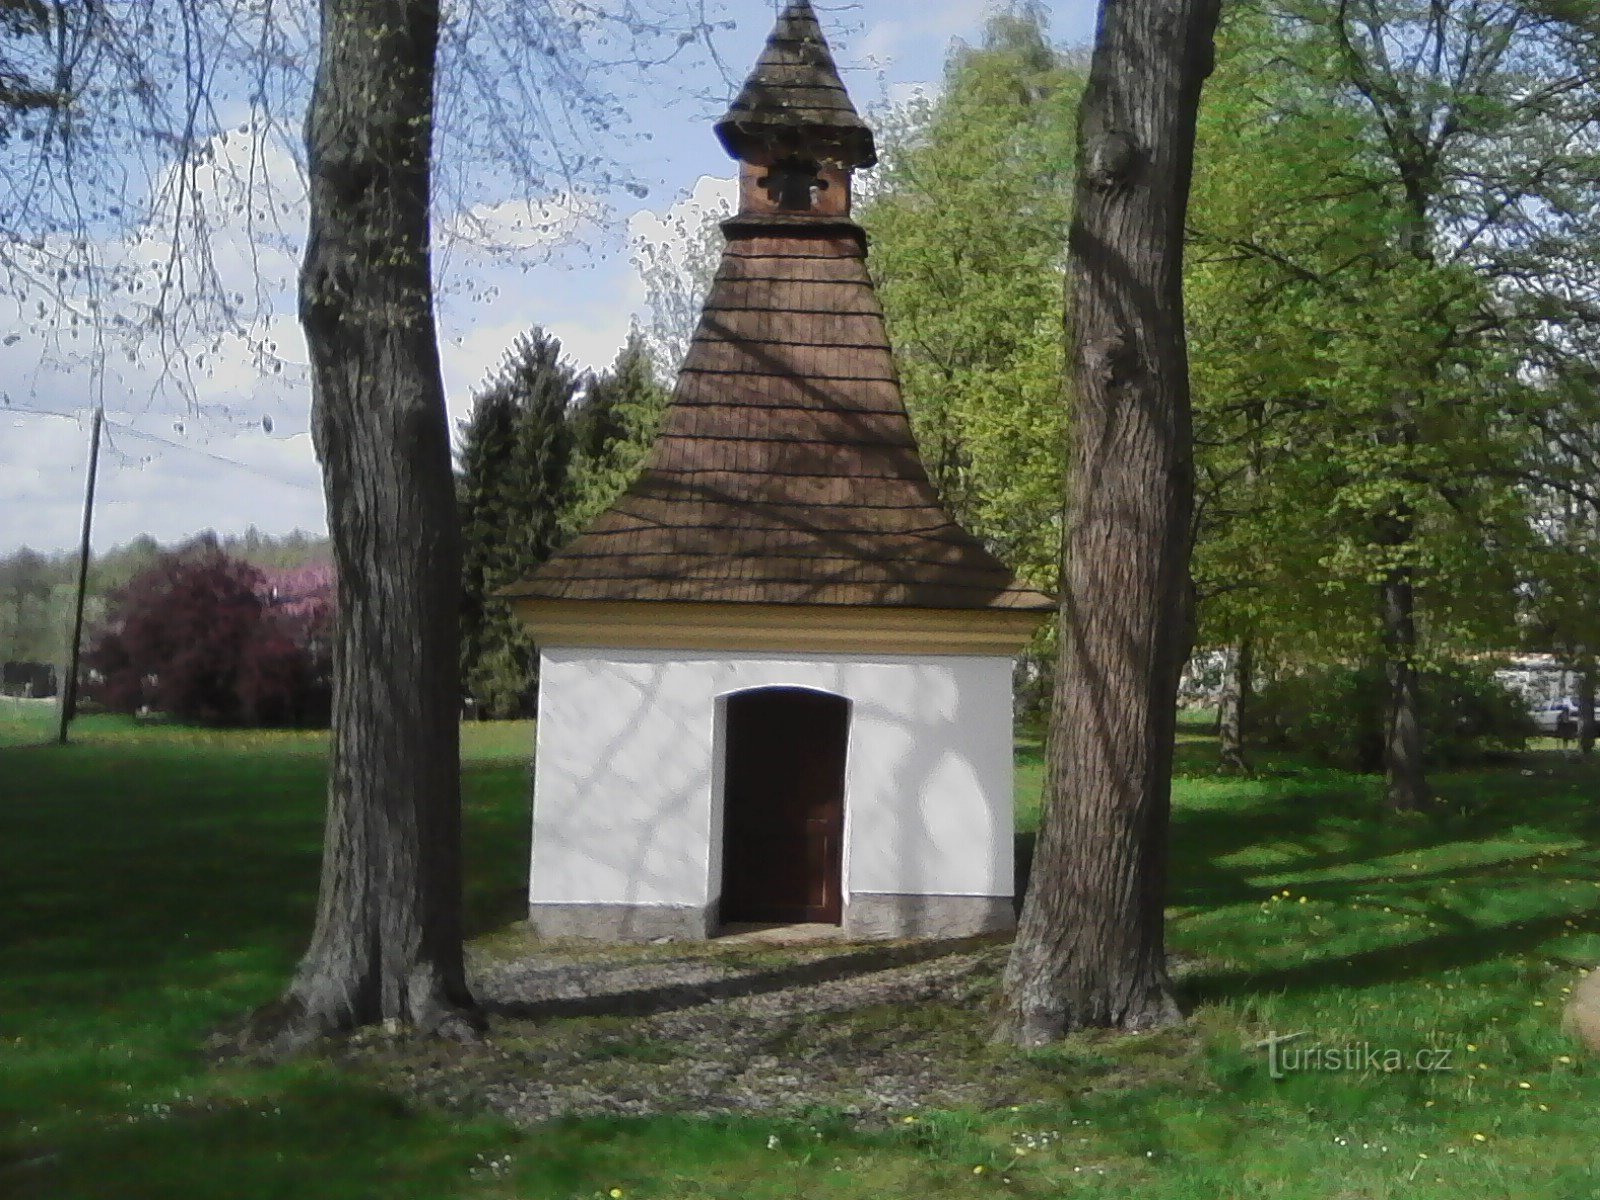 Primera capilla en Leskovice, comenzamos aquí.